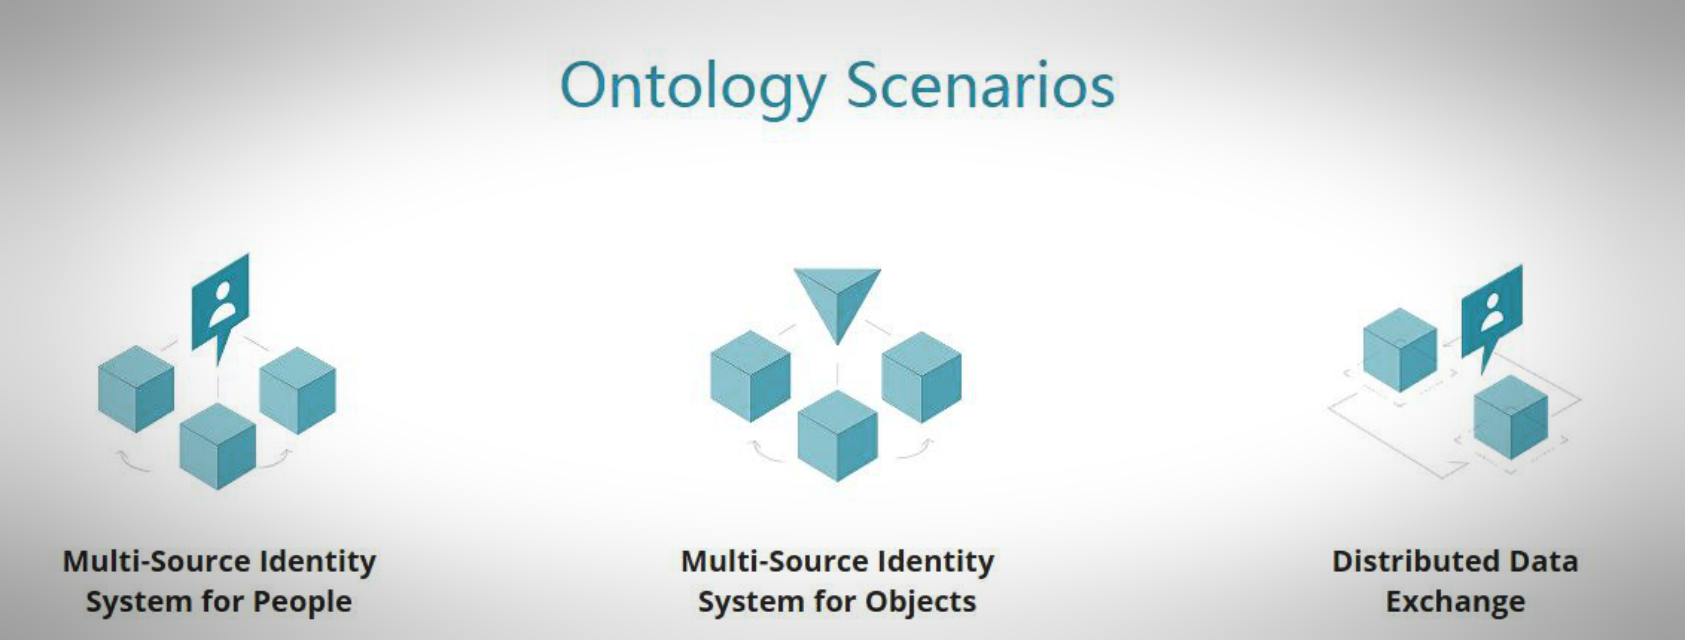 ontology scenarios